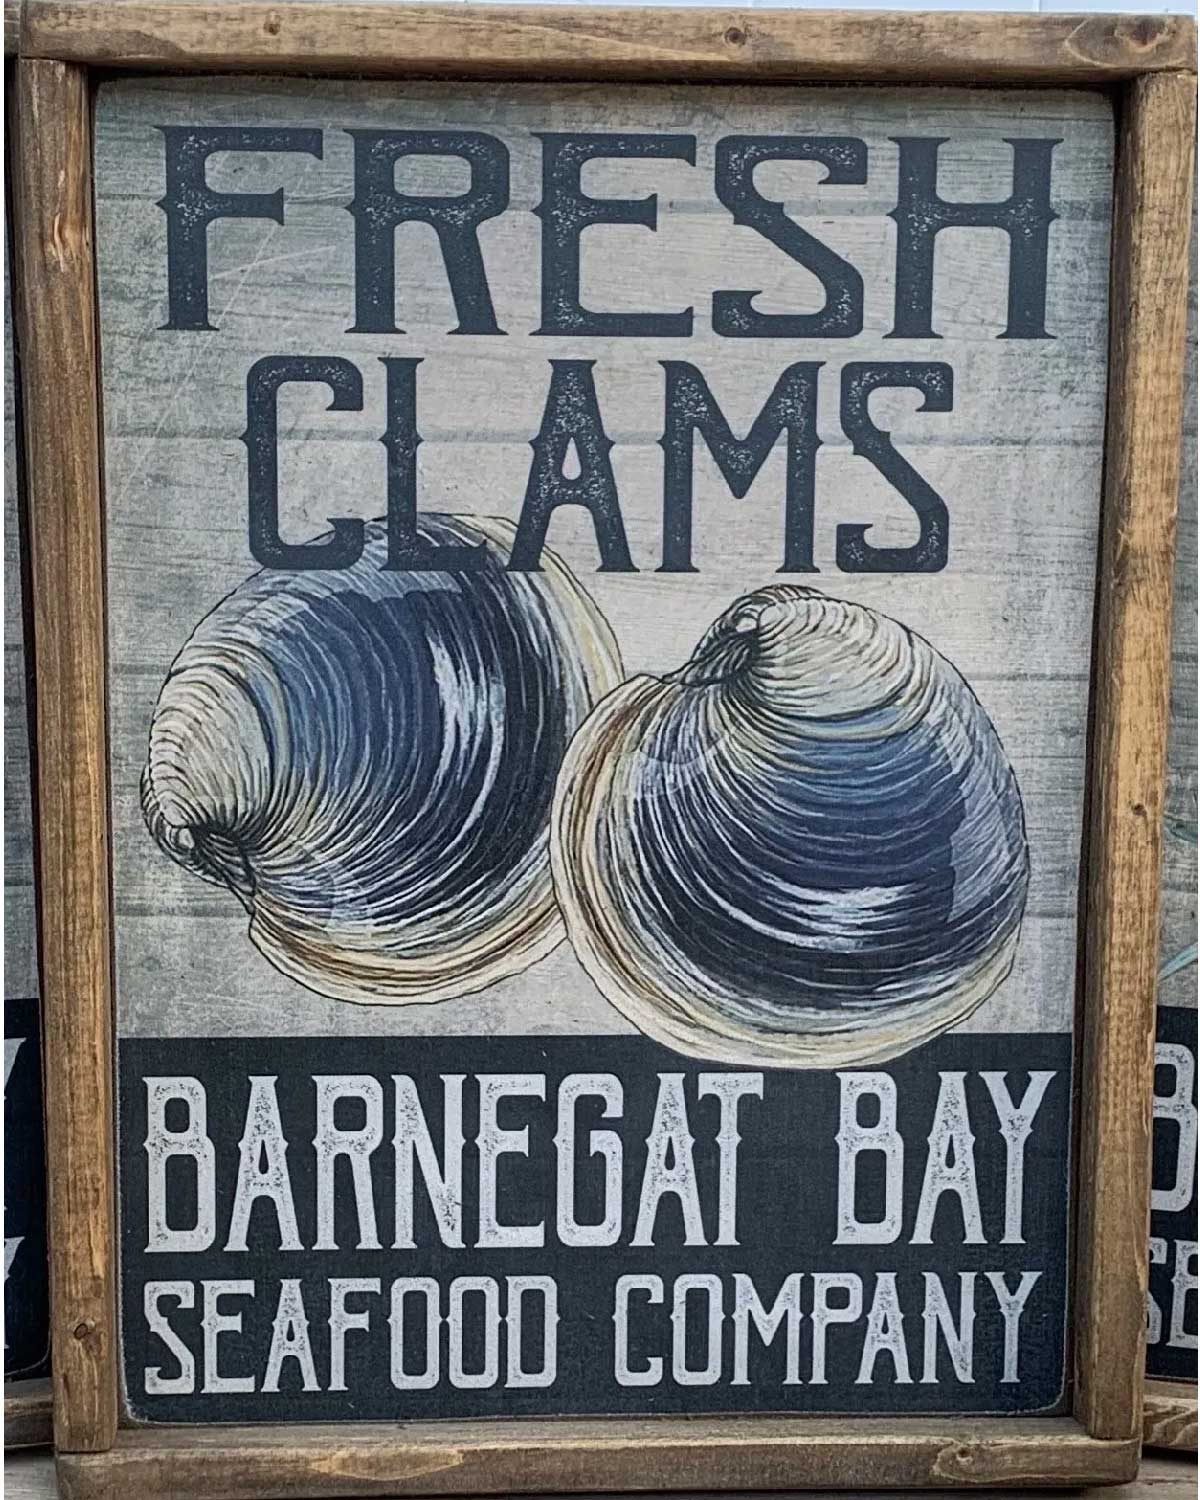 Seafood Company | Fresh Clams | Wood Sign | Barnegat Bay | Rustic Frame